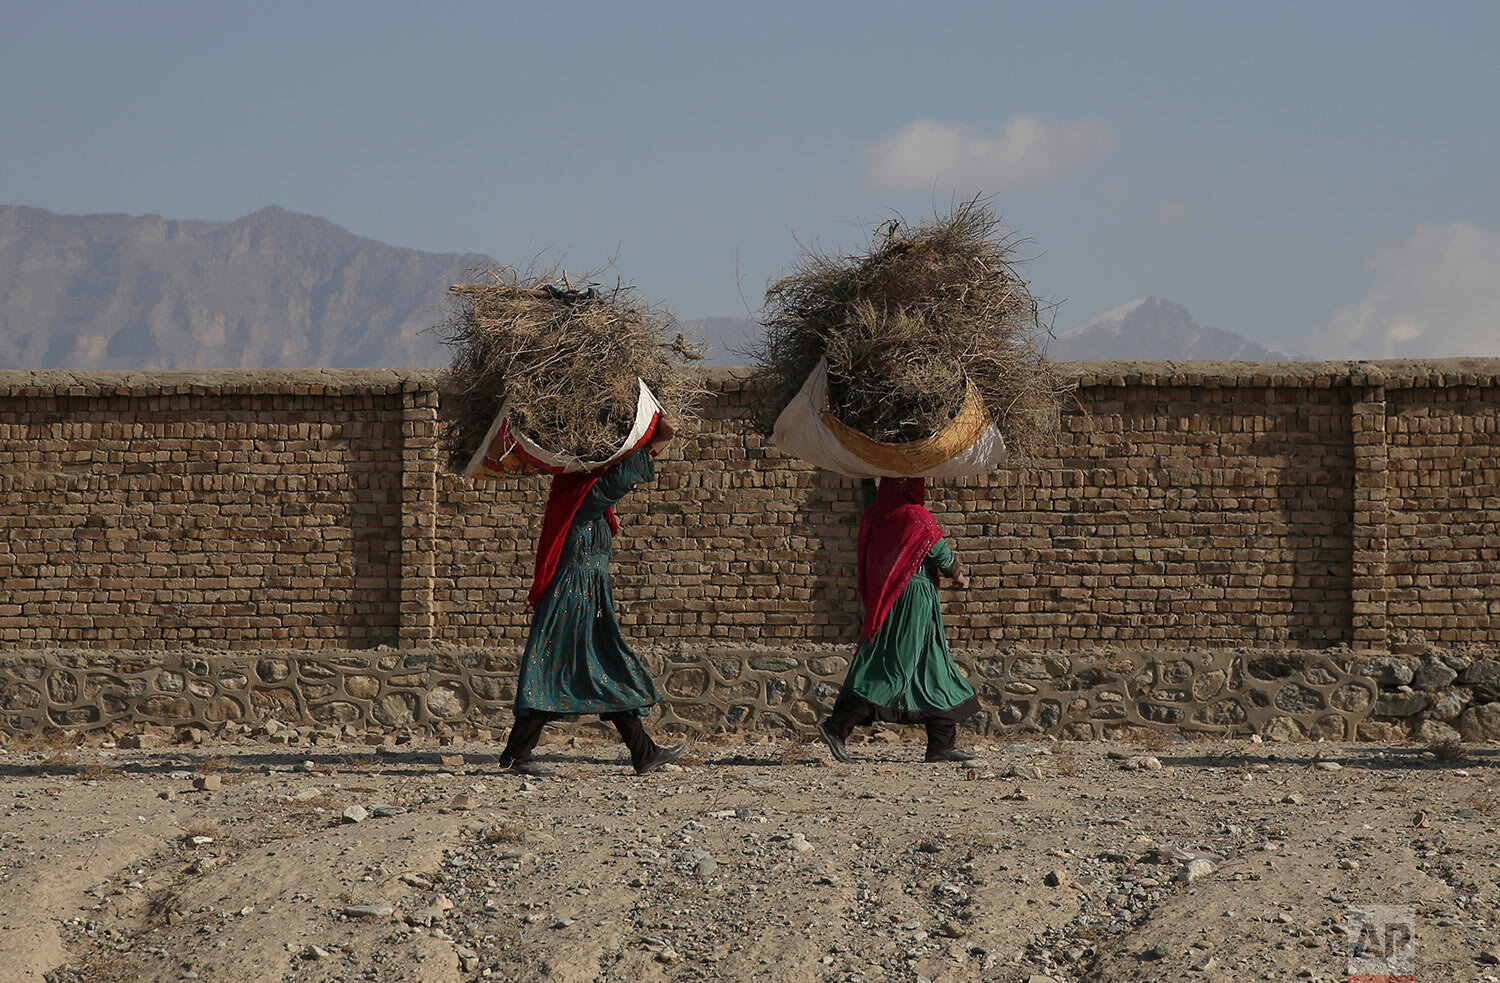  Women carry sacks of firewood on their heads in the Bagram road in Parwan province of Kabul, Afghanistan, Wednesday, Dec. 11, 2019. (AP Photo/Rahmat Gul) 